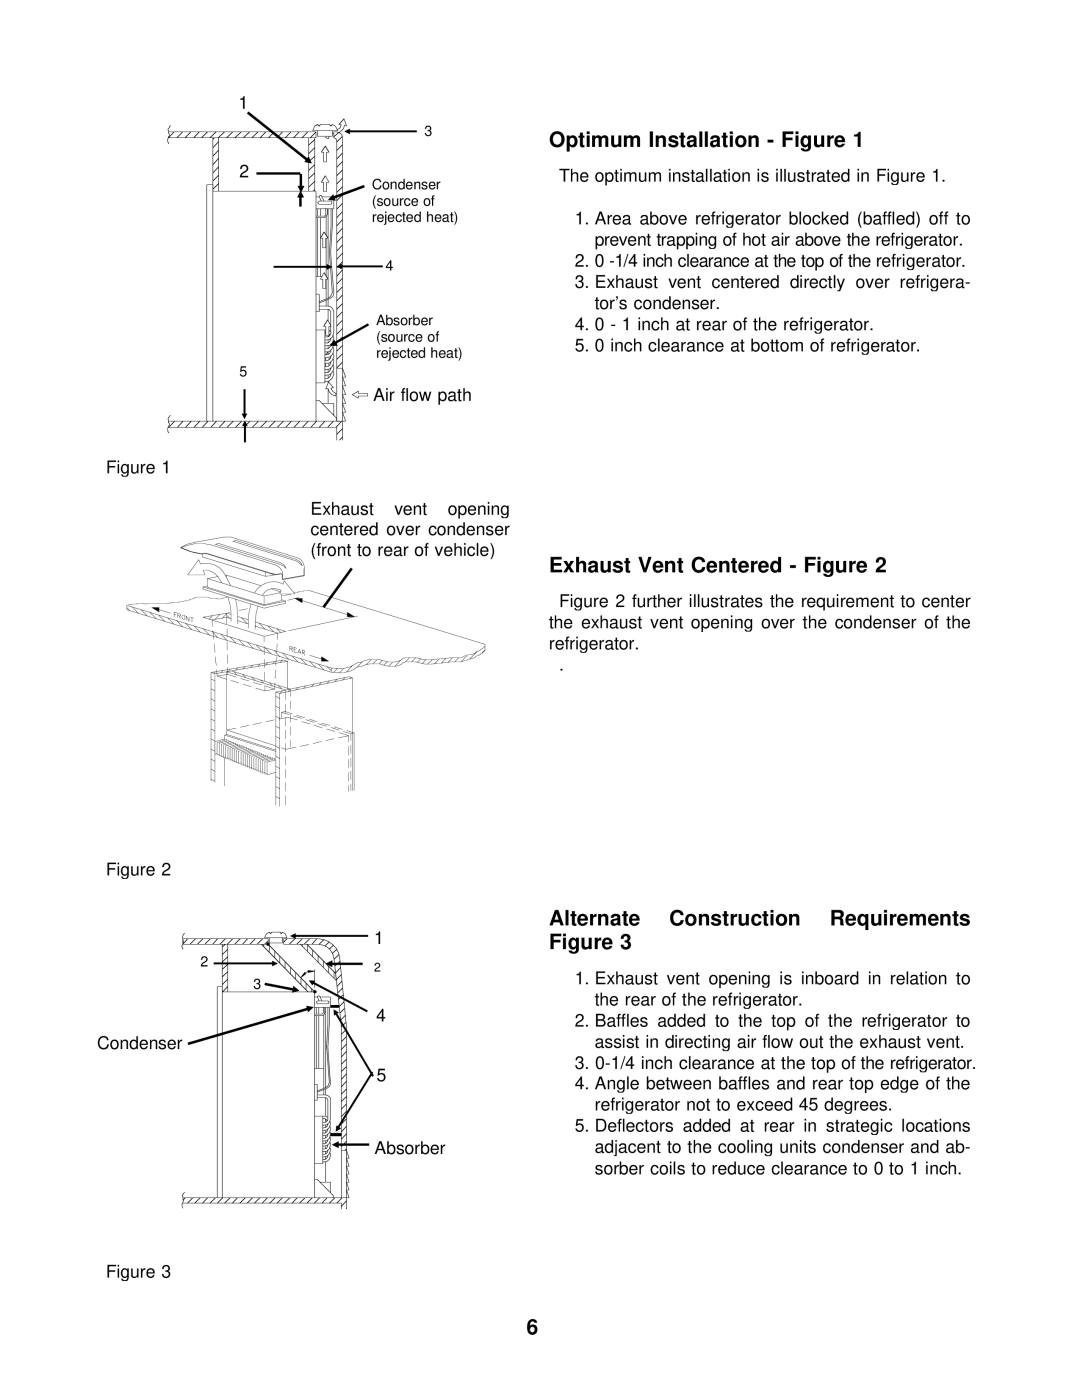 Norcold 452, 483 Optimum Installation - Figure, Exhaust Vent Centered - Figure, Alternate Construction Requirements Figure 